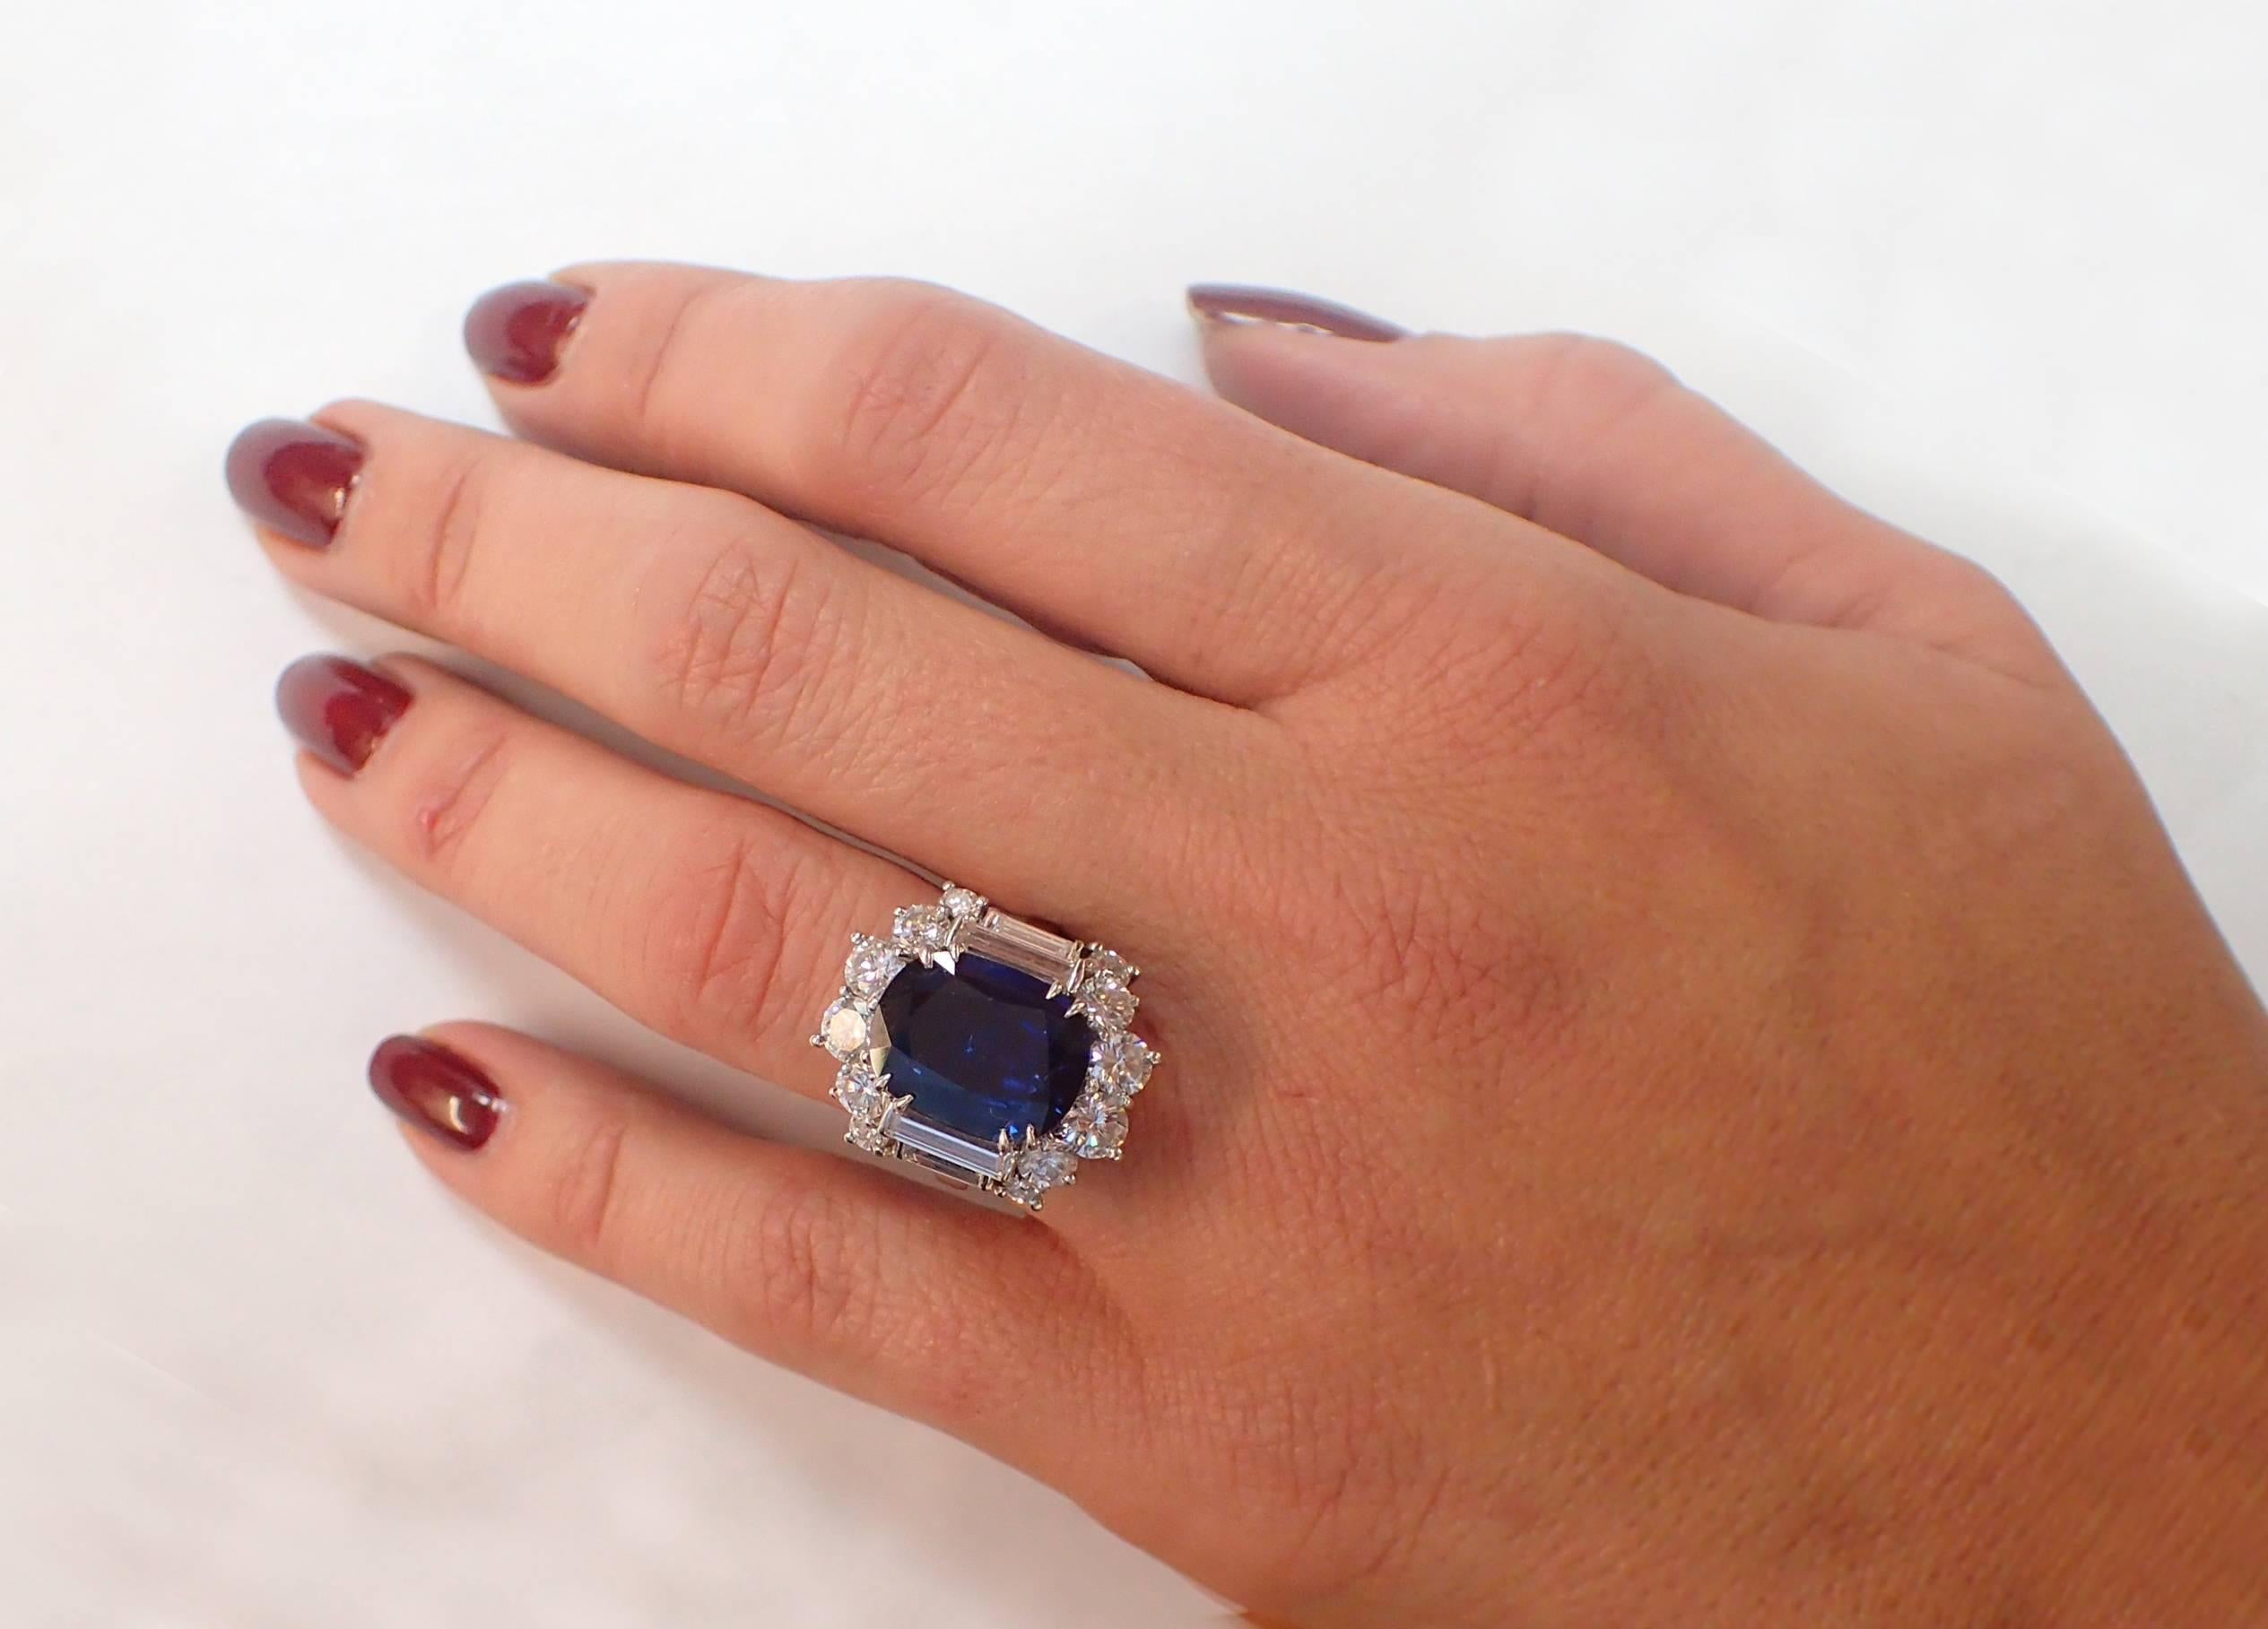 Women's 6.59 Carat Cushion Cut Blue Sapphire and Diamond Ring in Platinum